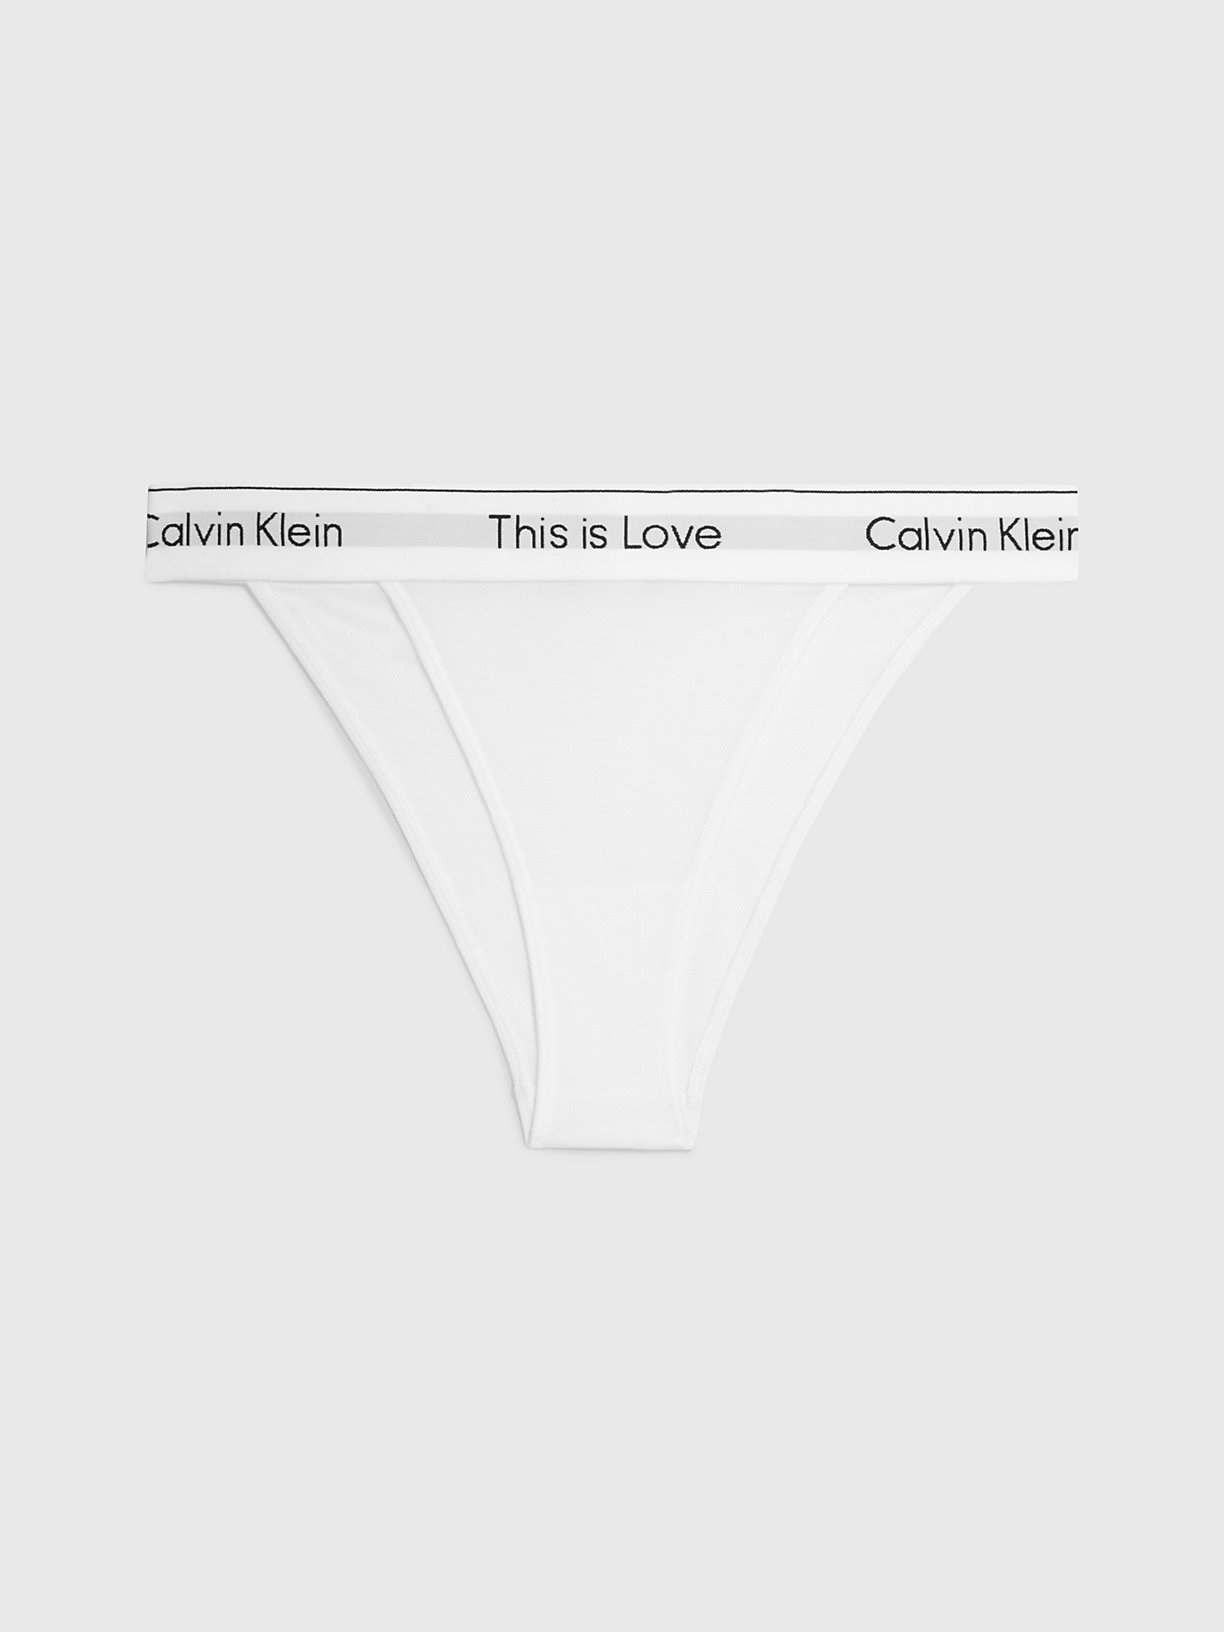 Kalhotky CALVIN KLEIN (QF7205E-01), Velikost S, Barva bílá